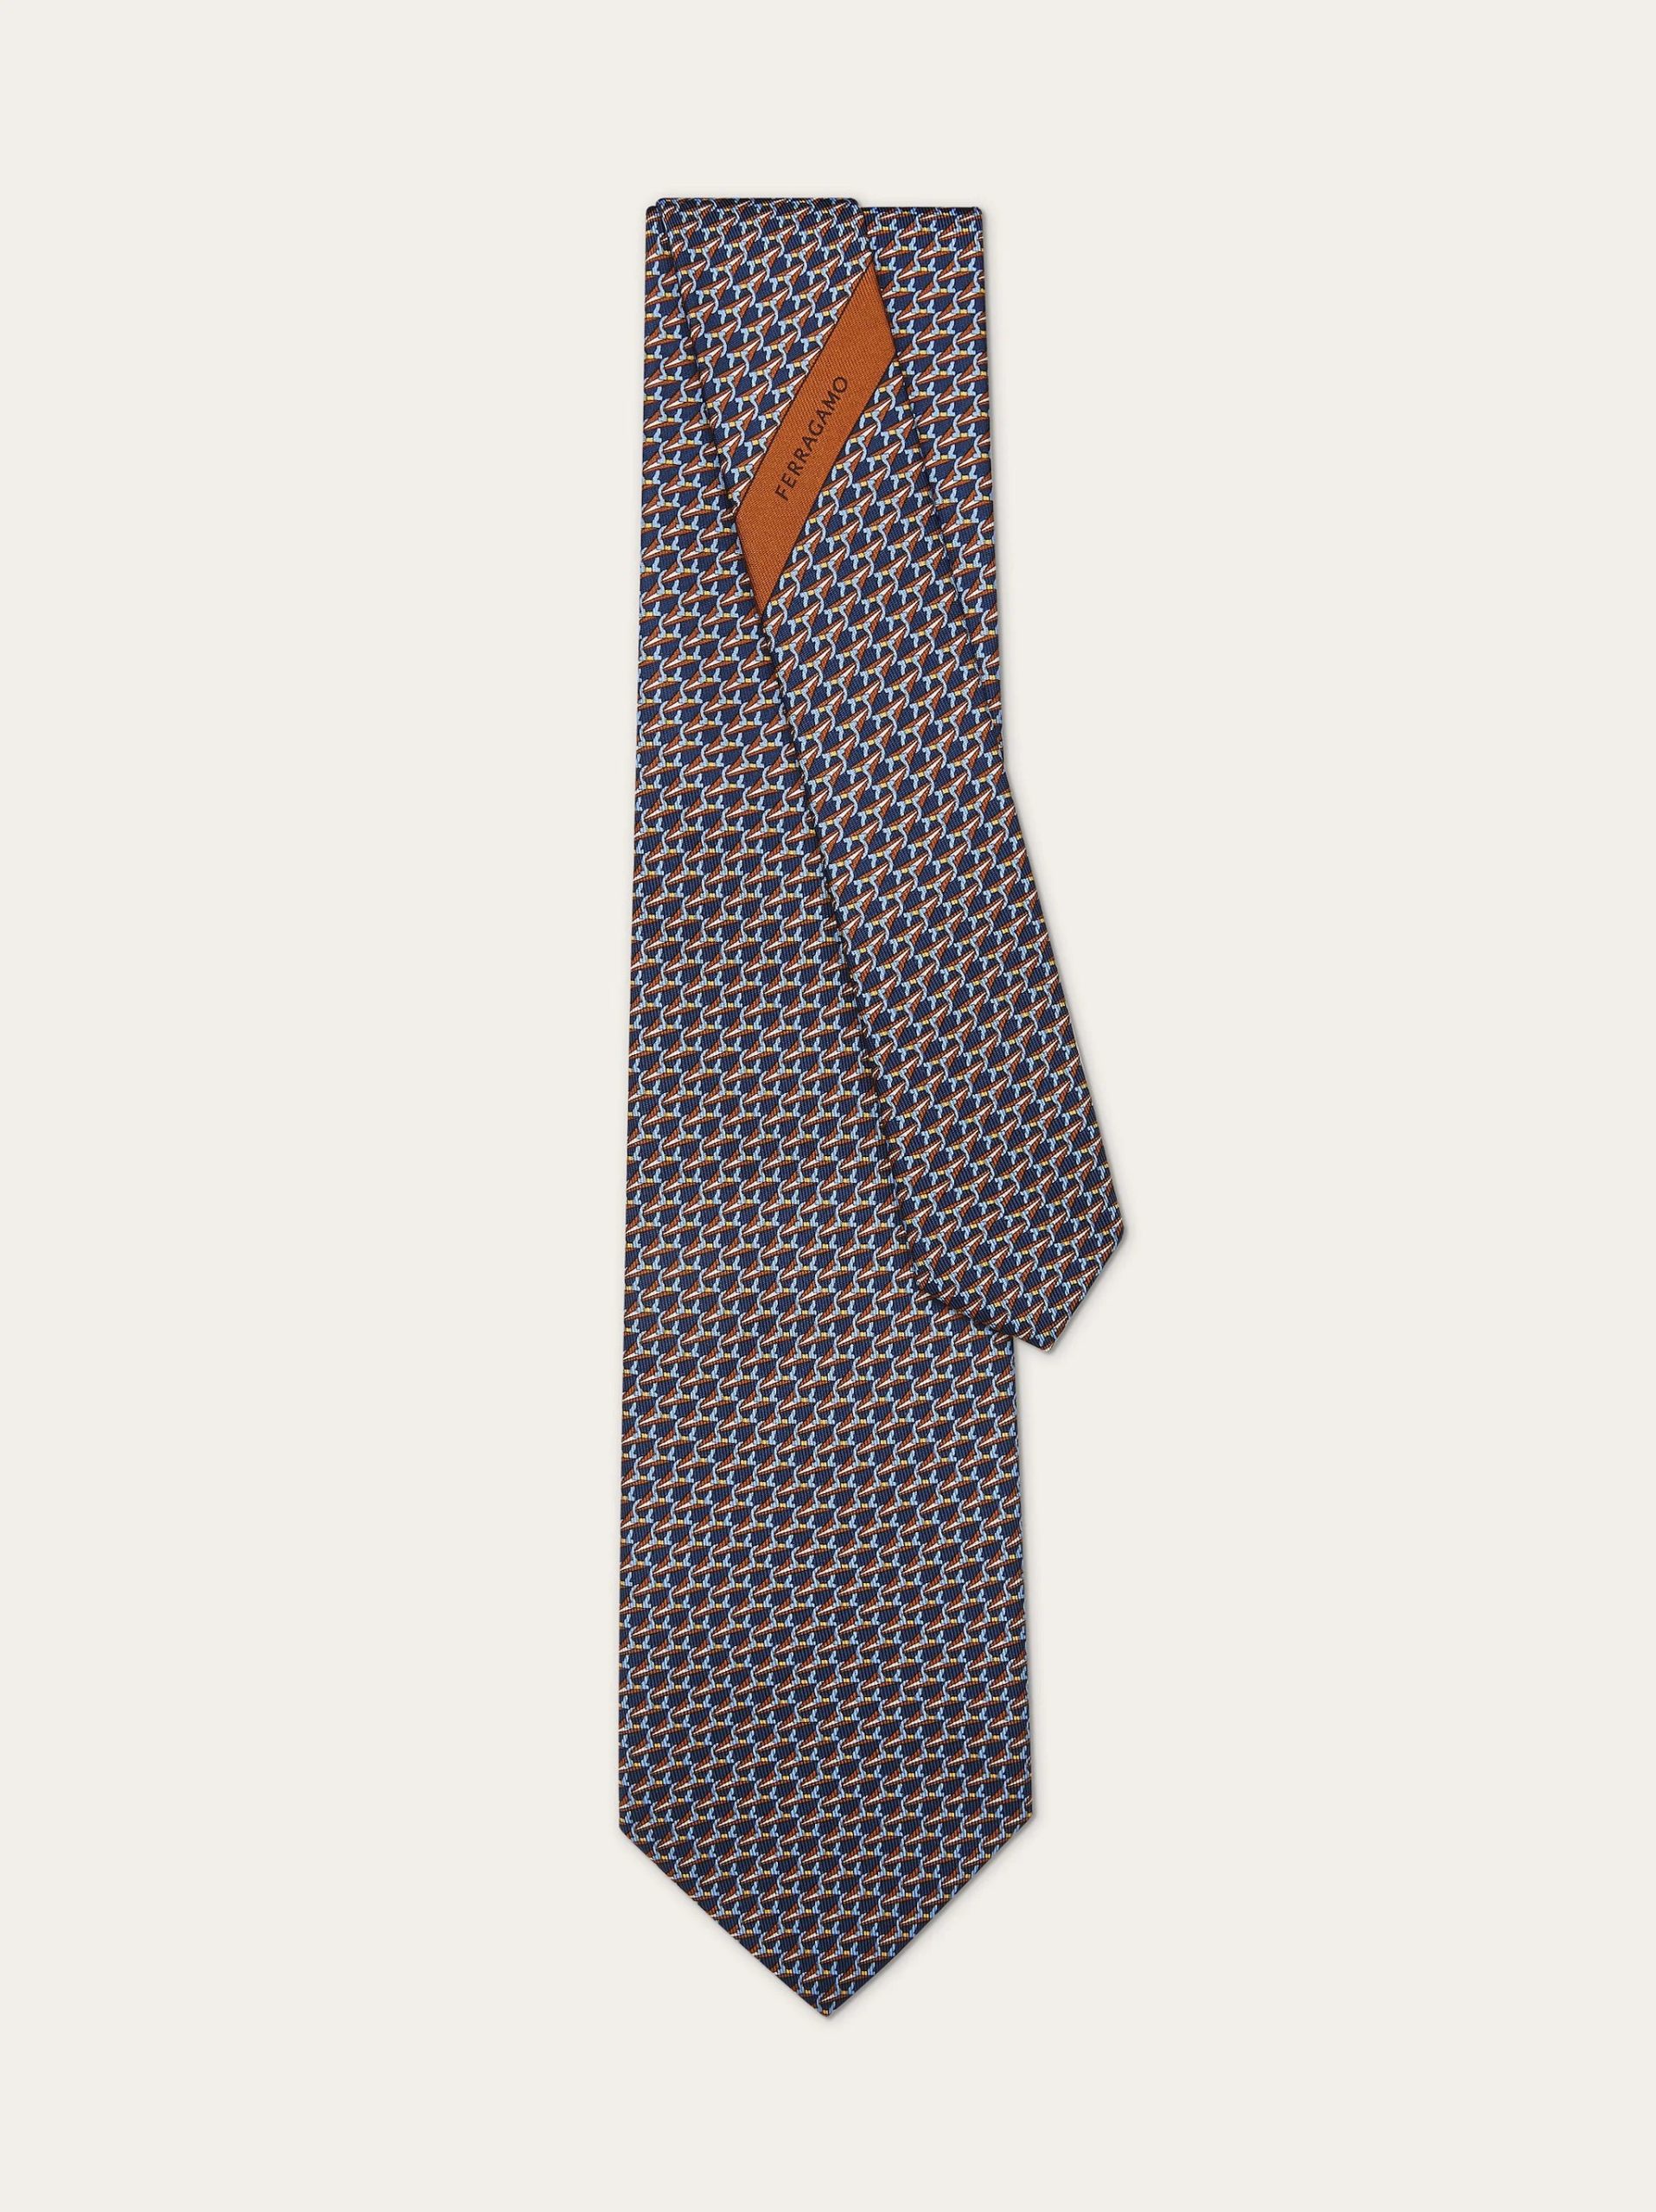 Ferragamo tie: Elevate Your Look with Italian Elegance缩略图